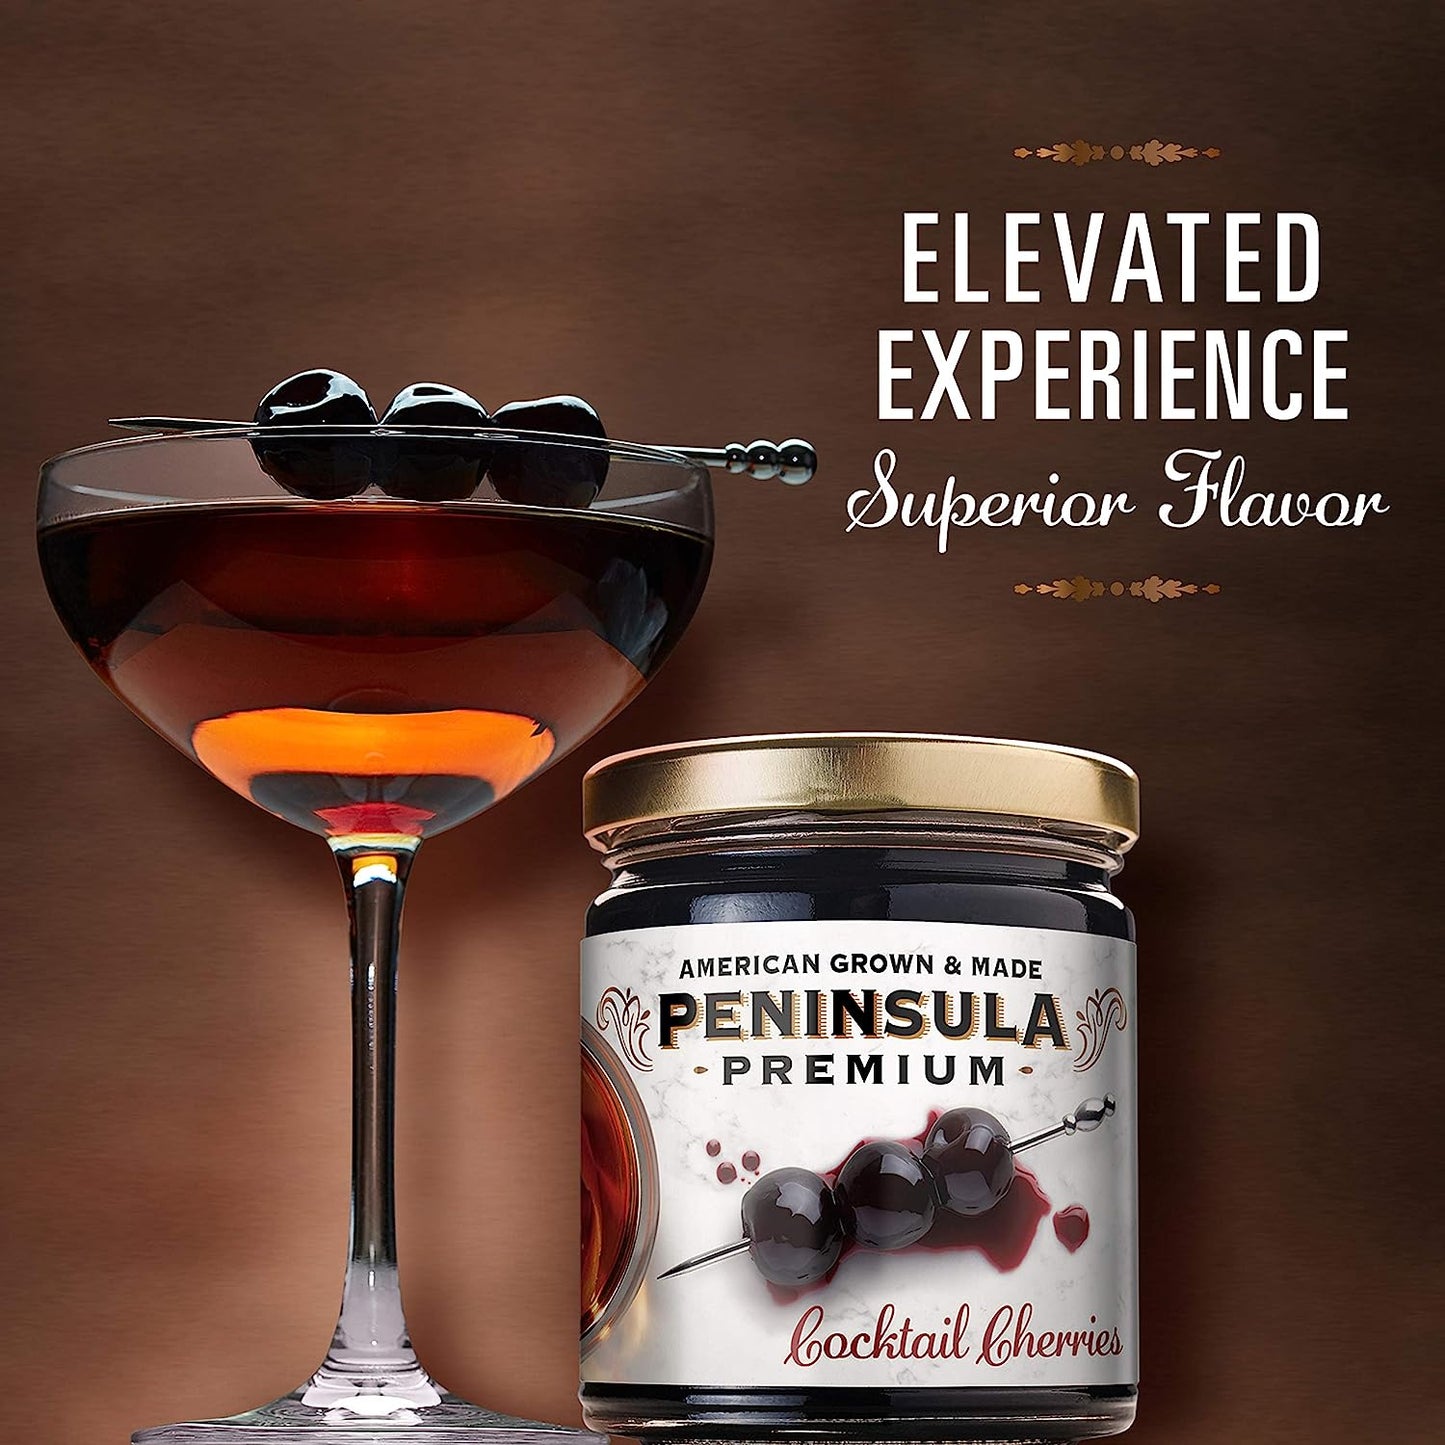 Peninsula Premium Cocktail Cherries | Award Winning | Deep Burgundy-Red | Silky Smooth, Rich Syrup | Luxe Fruit Forward, Sweet-Tart Flavor | Gourmet | American Grown & Made | 10.5 oz